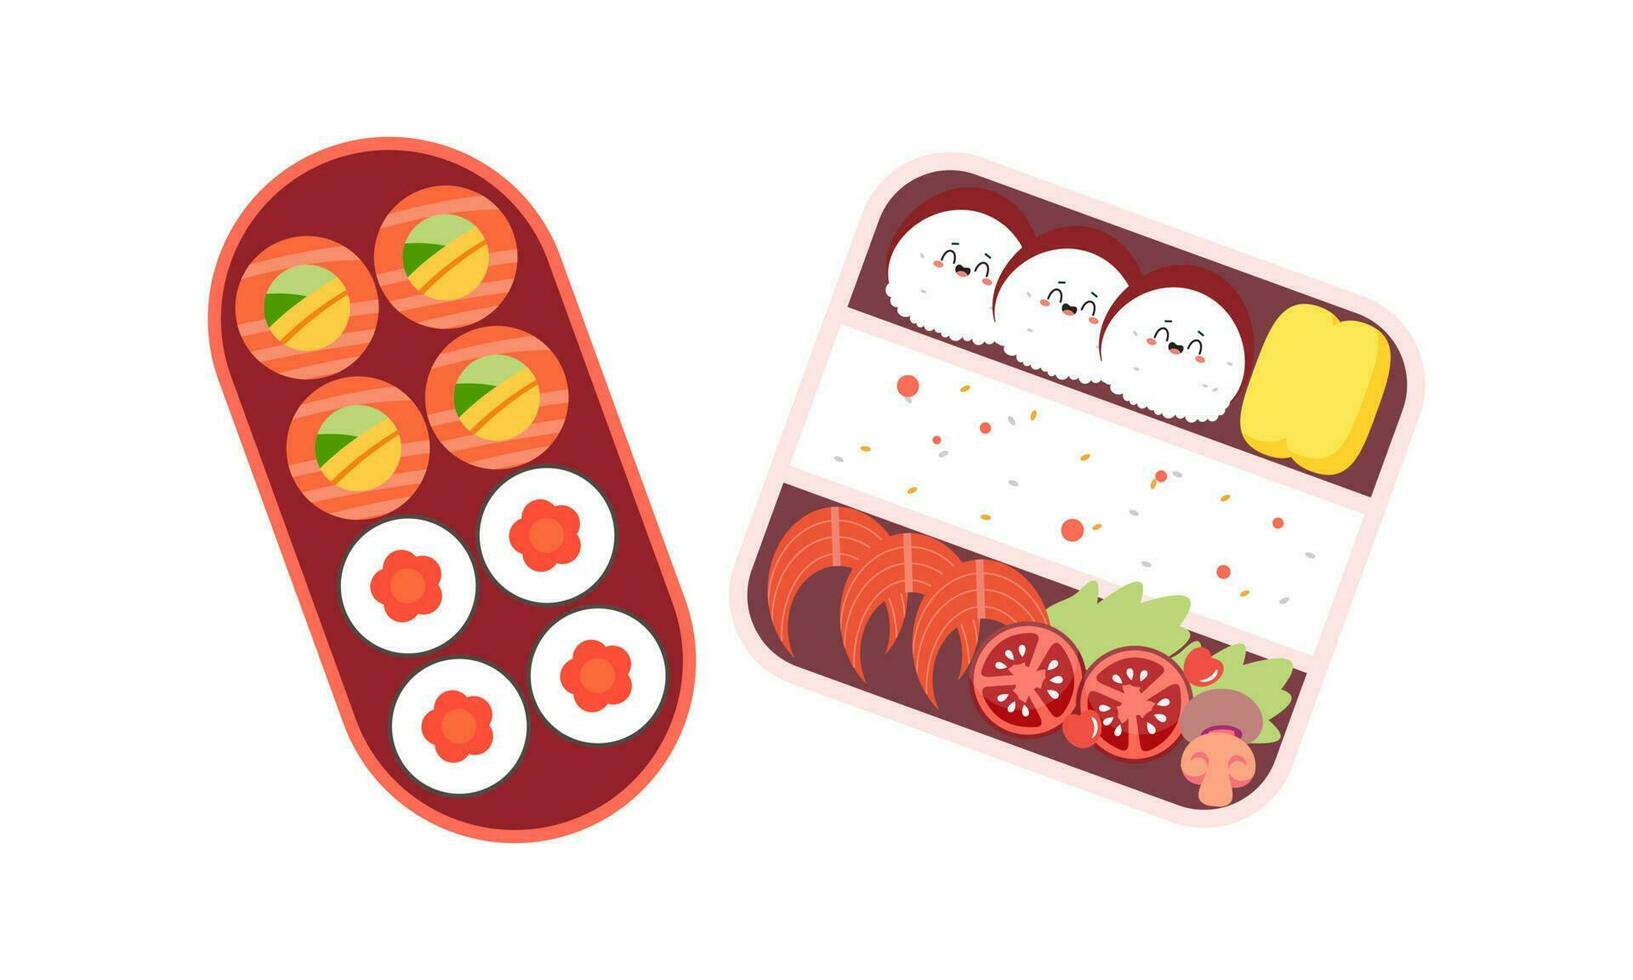 bento caja logo. japonés almuerzo caja. varios tradicional asiático comida dibujos animados estilo vector